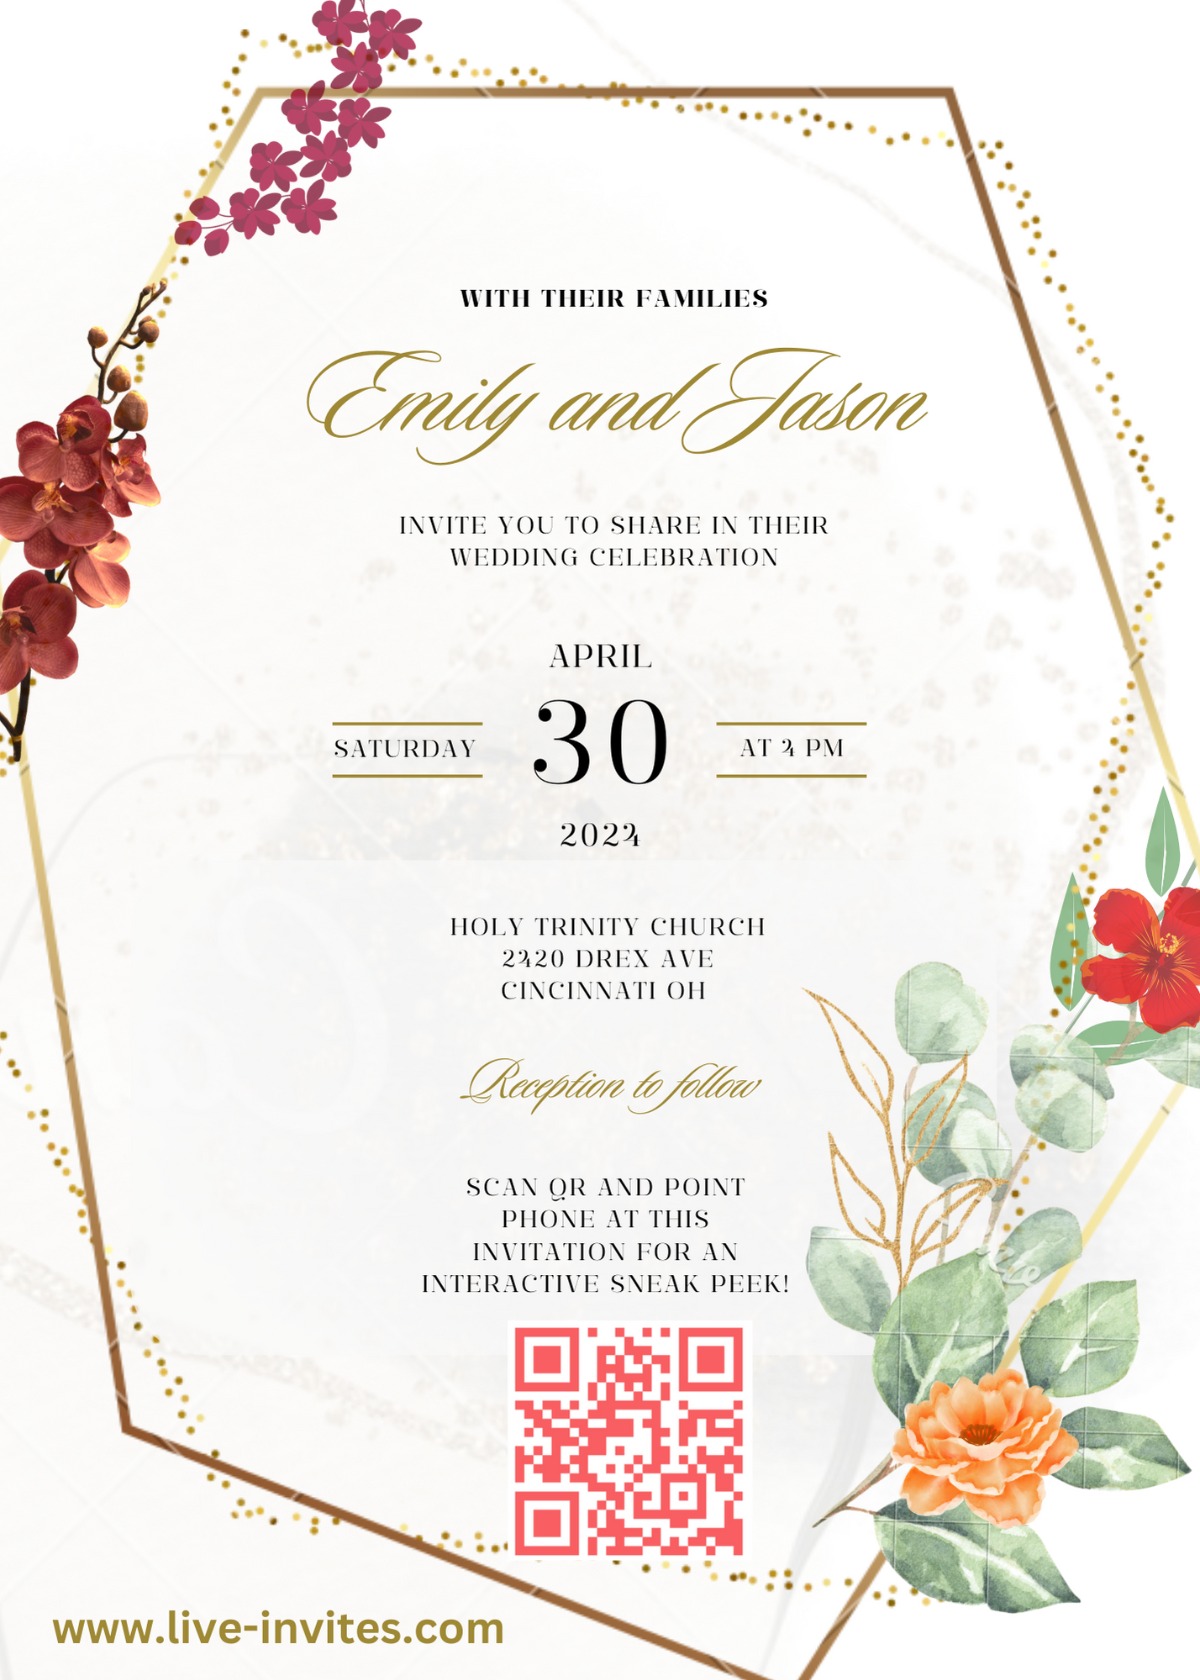 AR wedding invitations